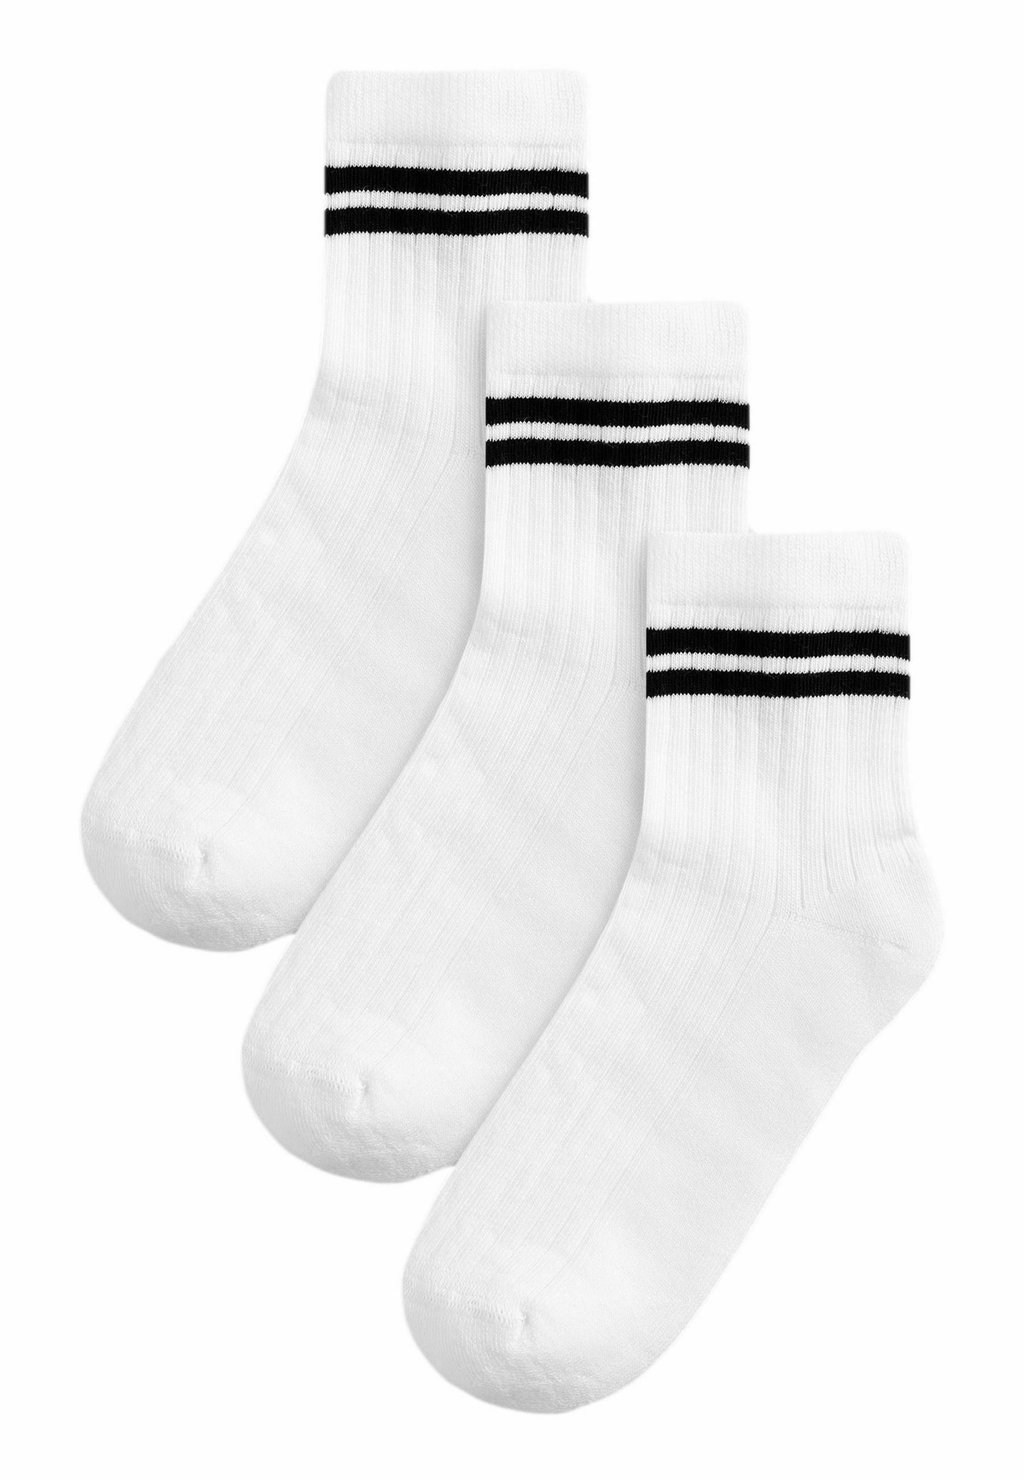 Носки Cushioned 3 Pack Next, цвет white black stripe носки rich cushioned footbed ankle 3 pack next цвет white black stripe